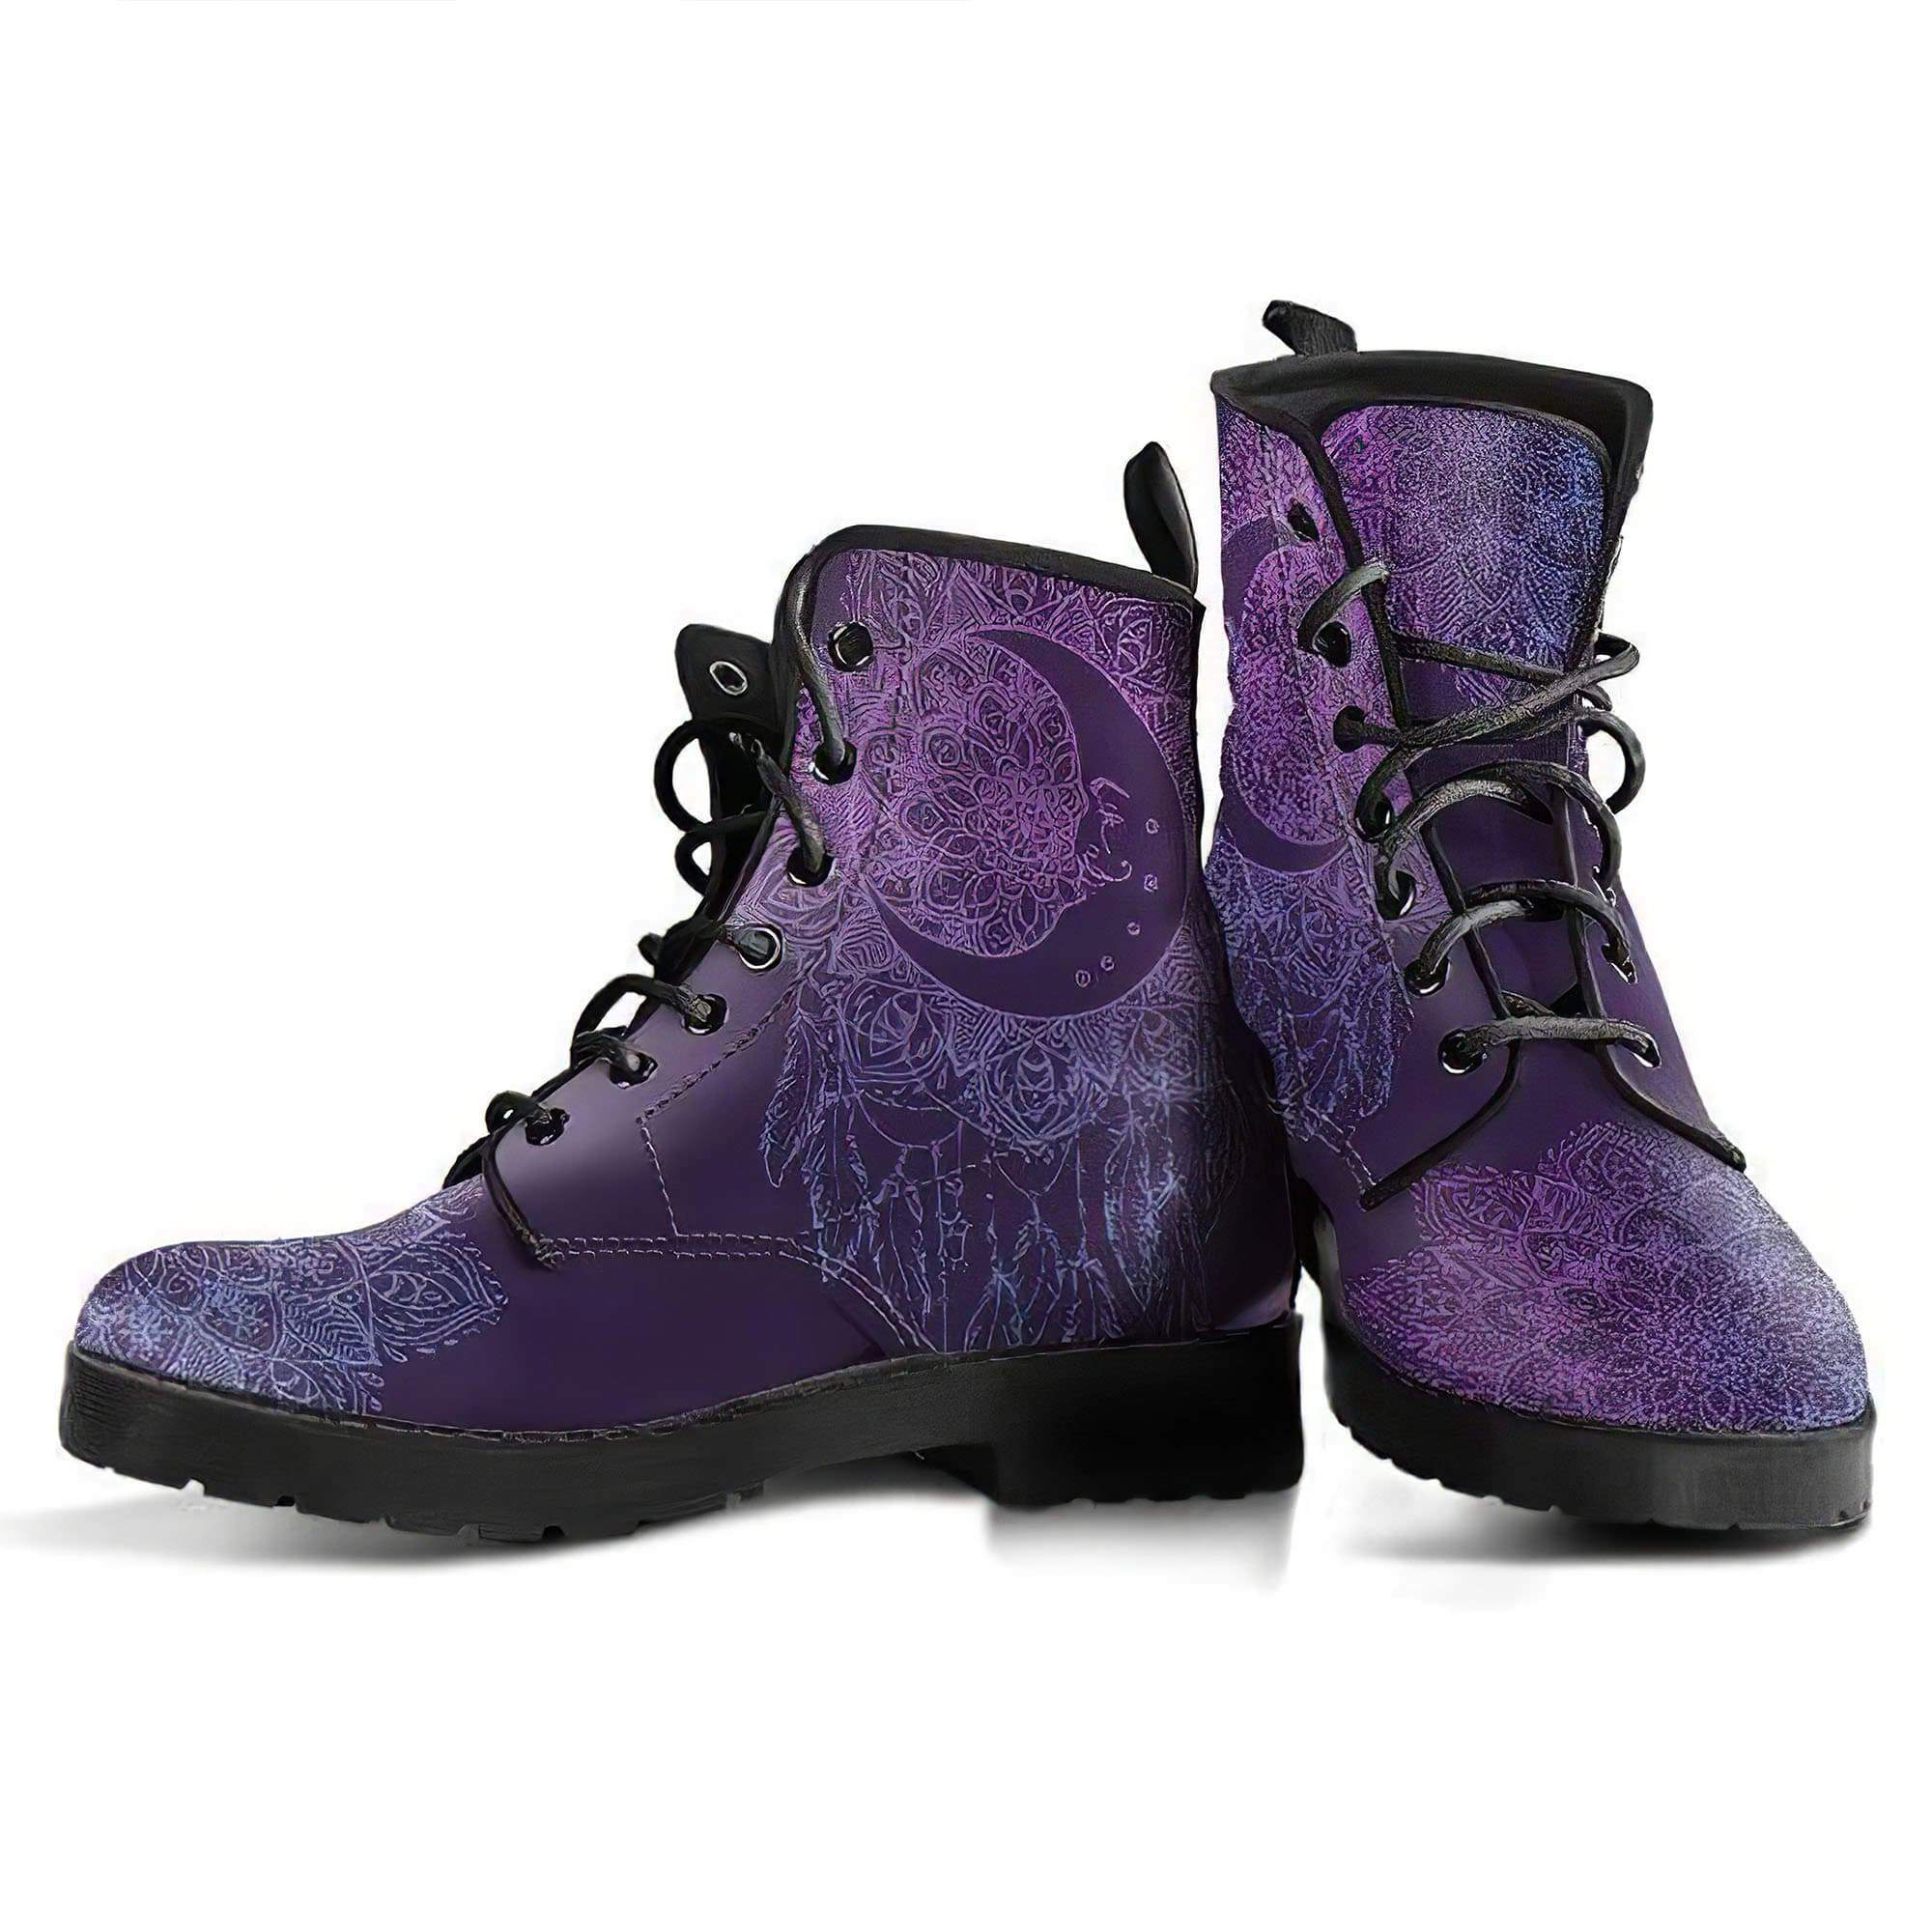 purple-moon-dreamcatcher-handcrafted-boots-women-s-leather-boots-12051937034301.jpg